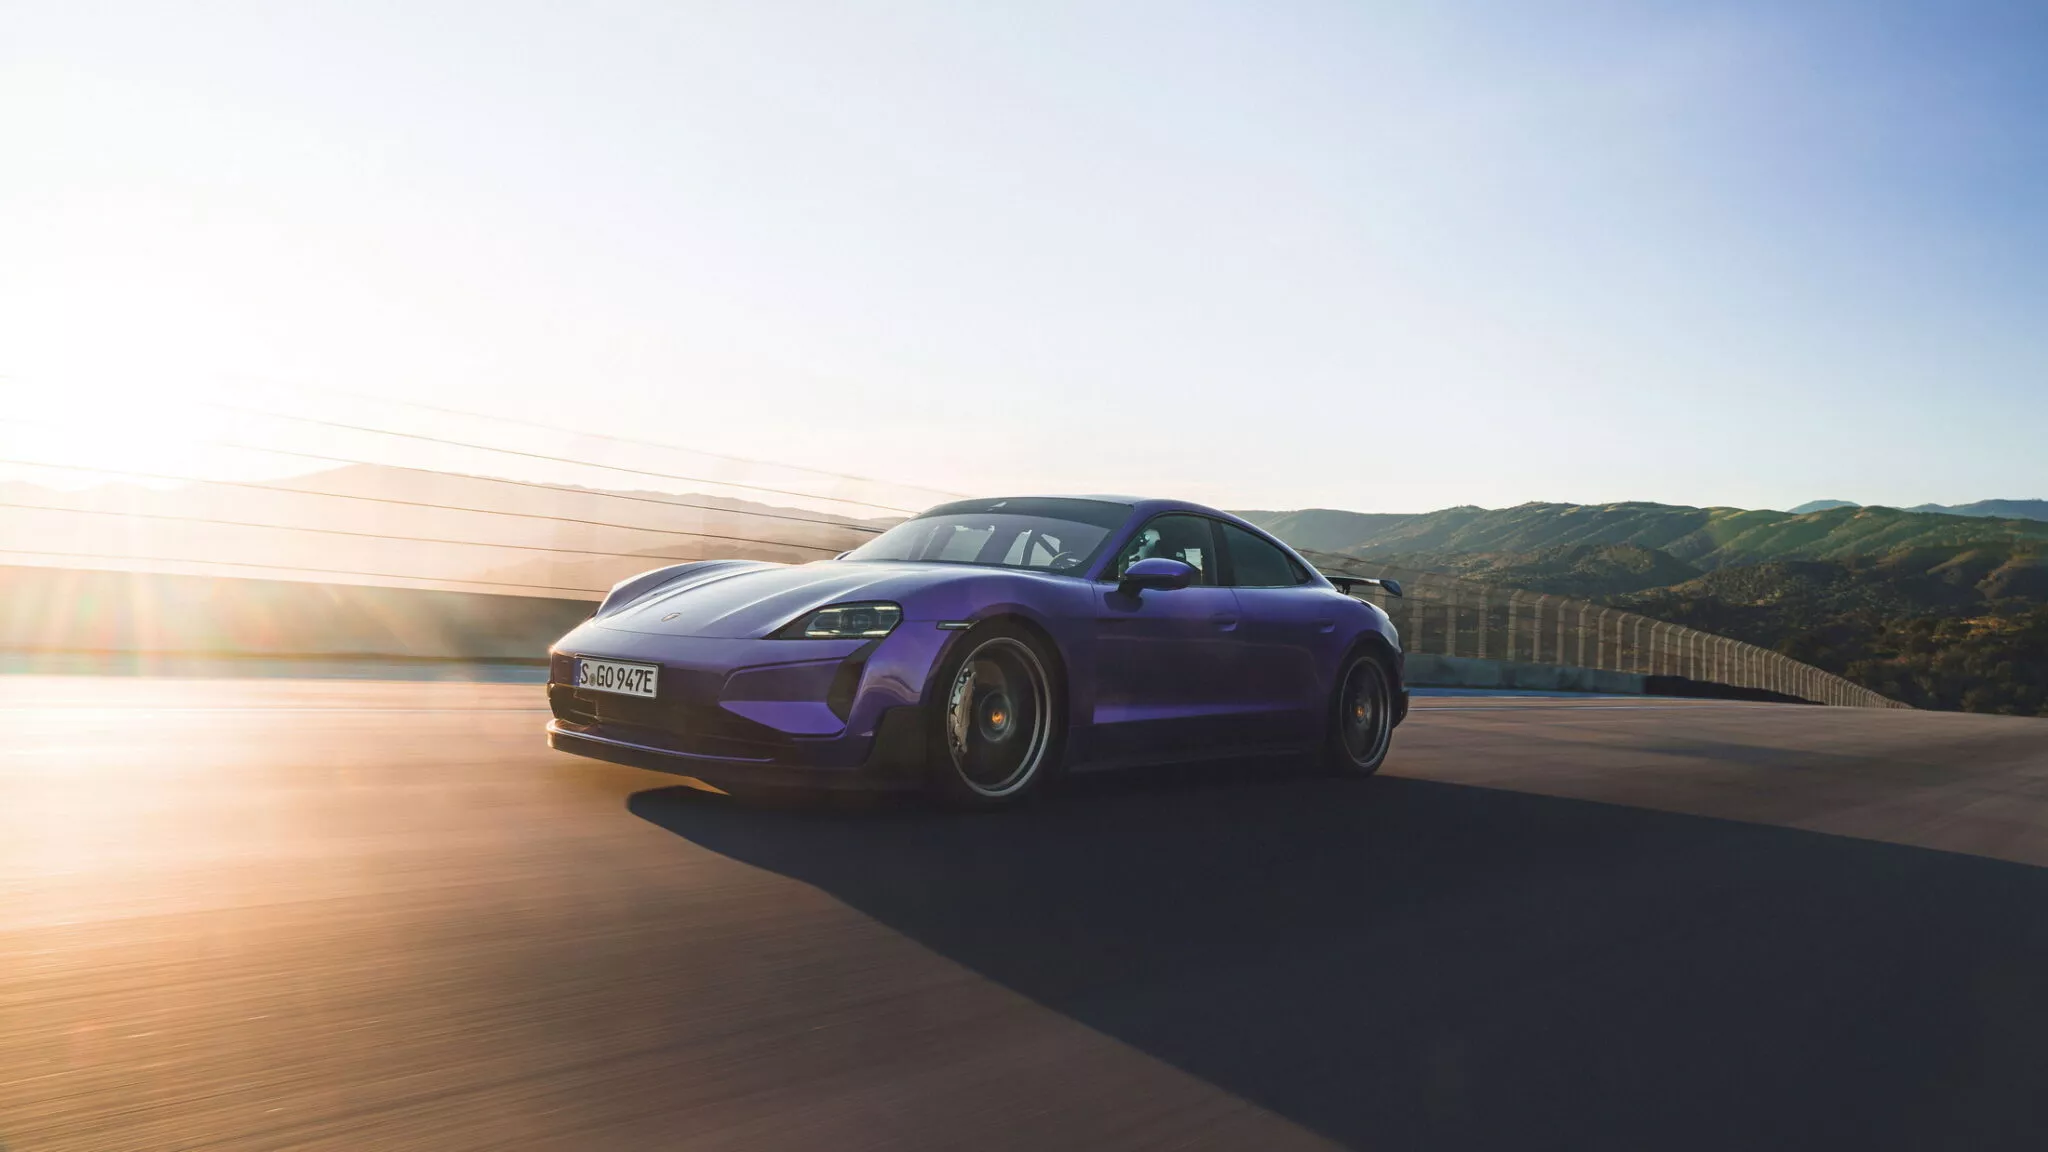 Siêu xe điện Porsche Taycan Turbo GT trình làng, mạnh 1.092 mã lực porsche-taycan-turbo-gt-sky-purple-metallic-4-2048x1152.webp